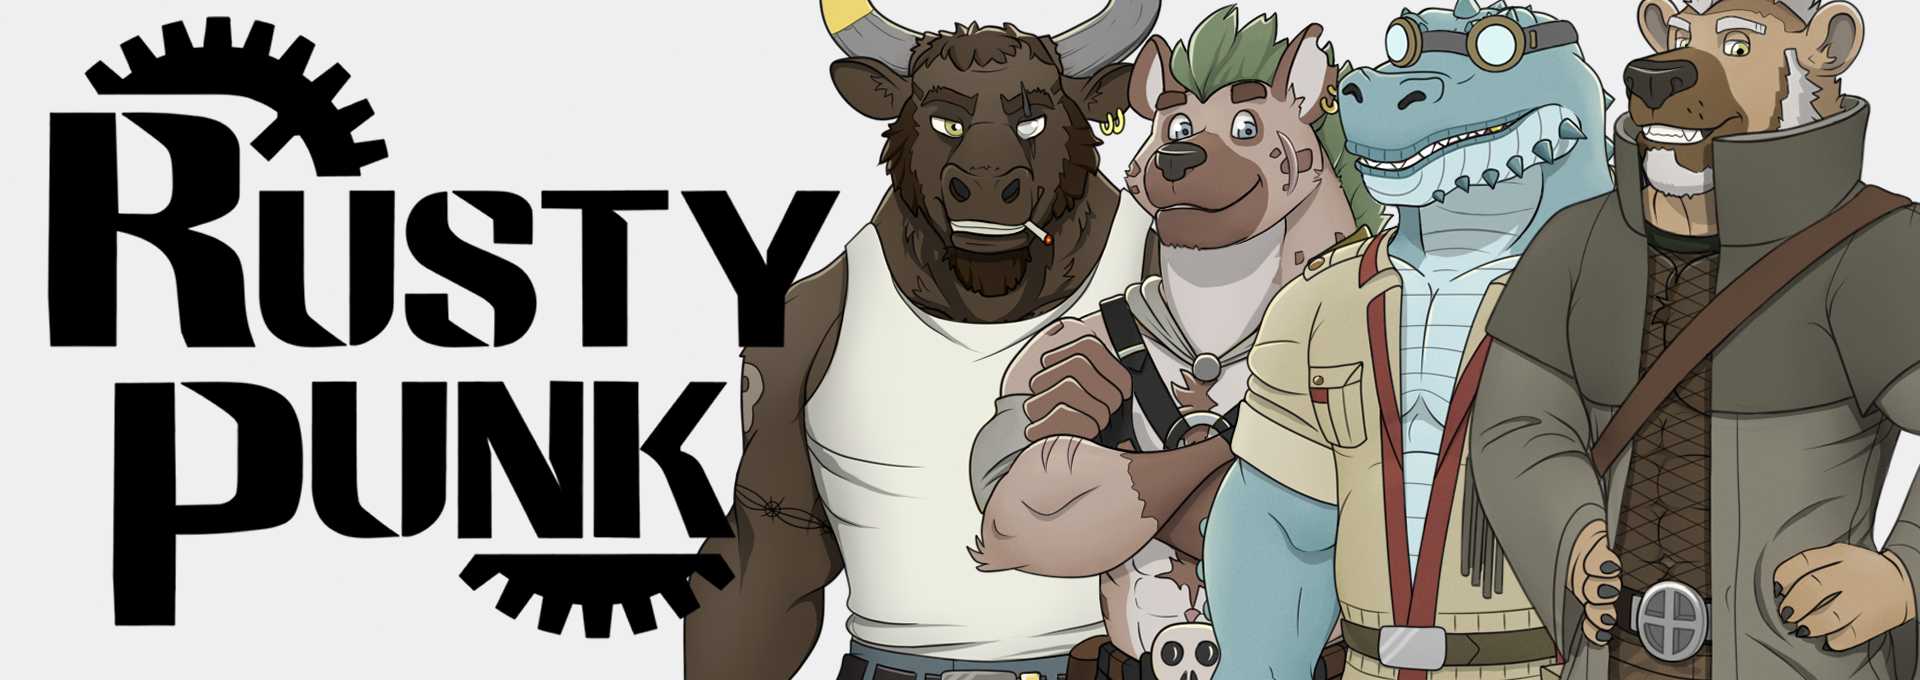 Rusty Punk [Hroft32 / Drunk Guardian Studio] Adult xxx Game Download